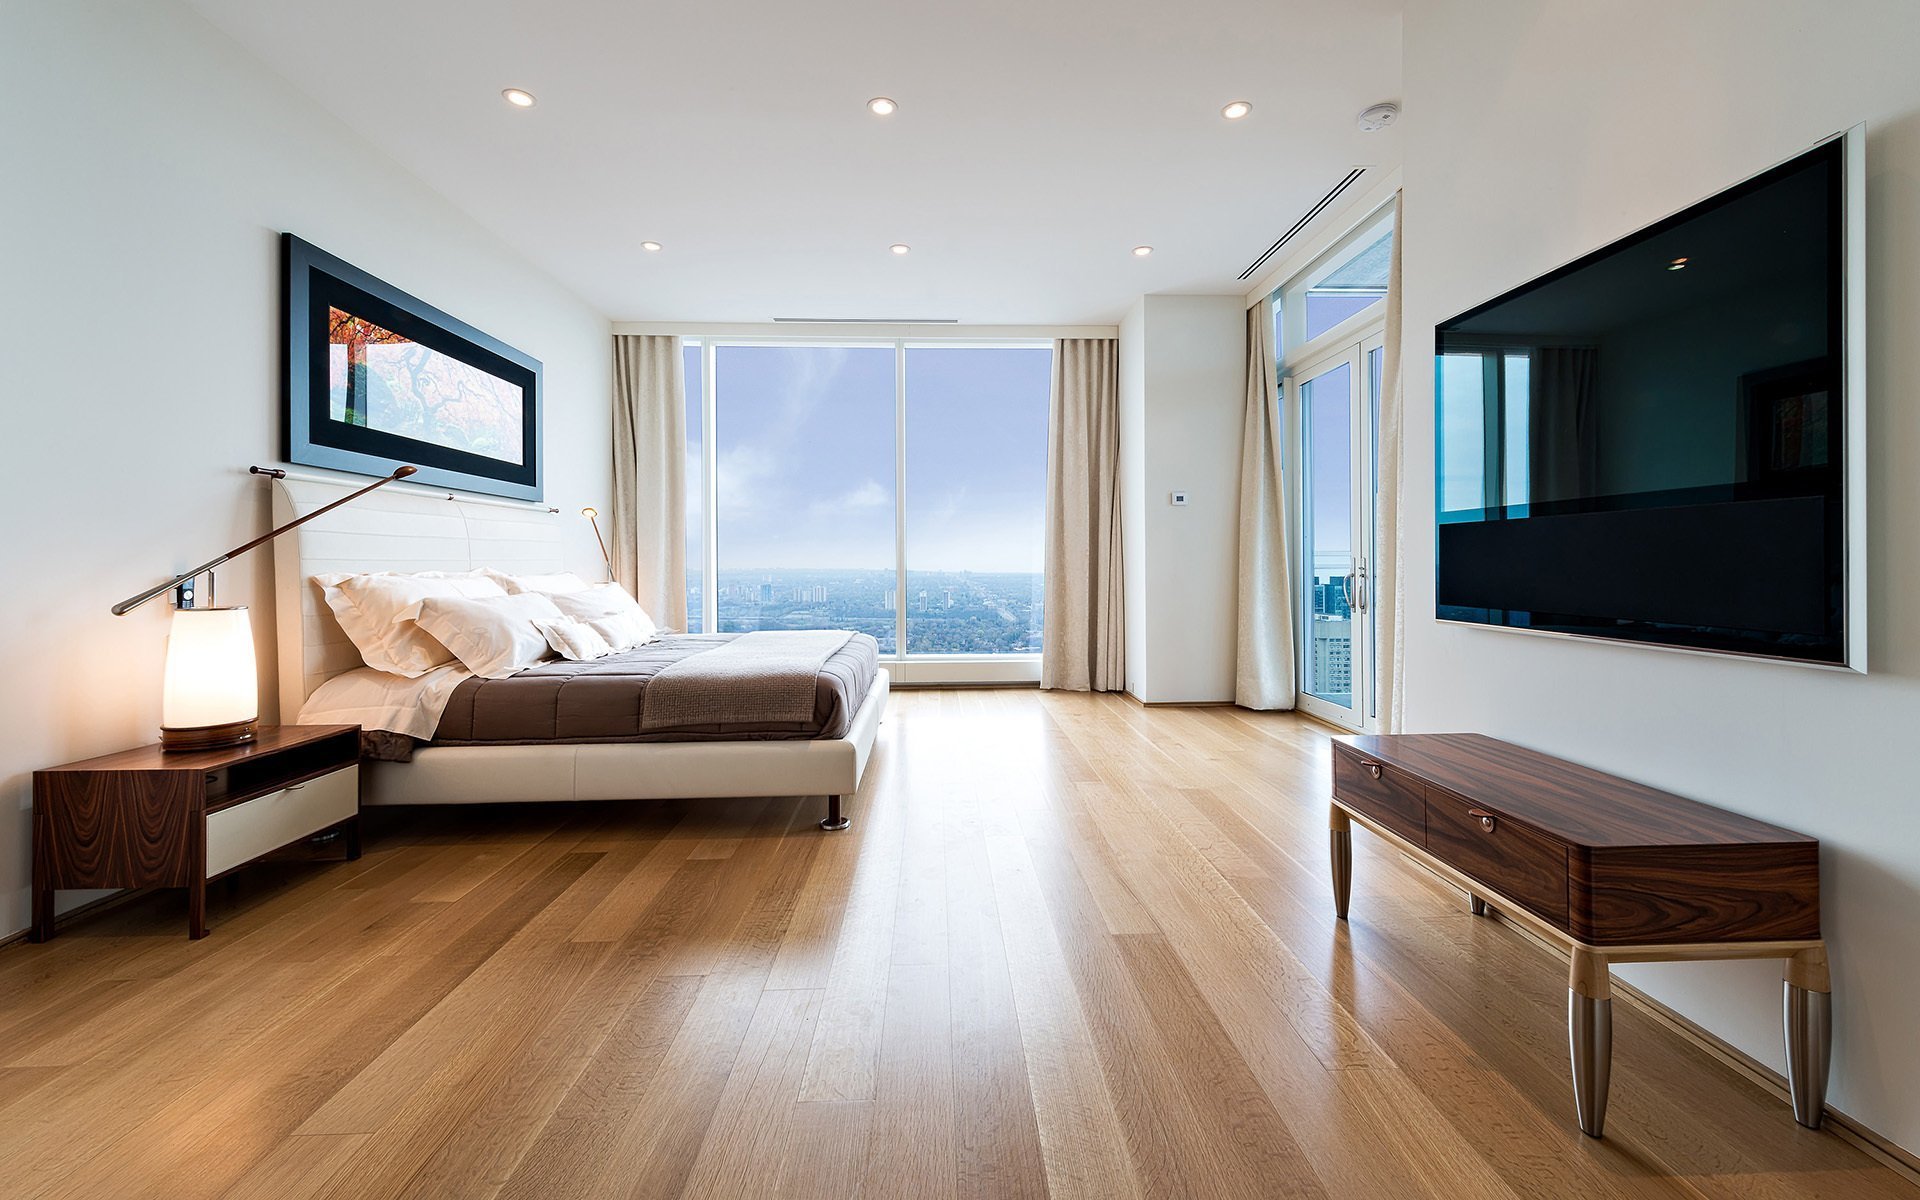 Real rooms. Спальня с панорамными окнами. Красивая квартира. Светлая комната. Красивая комната.